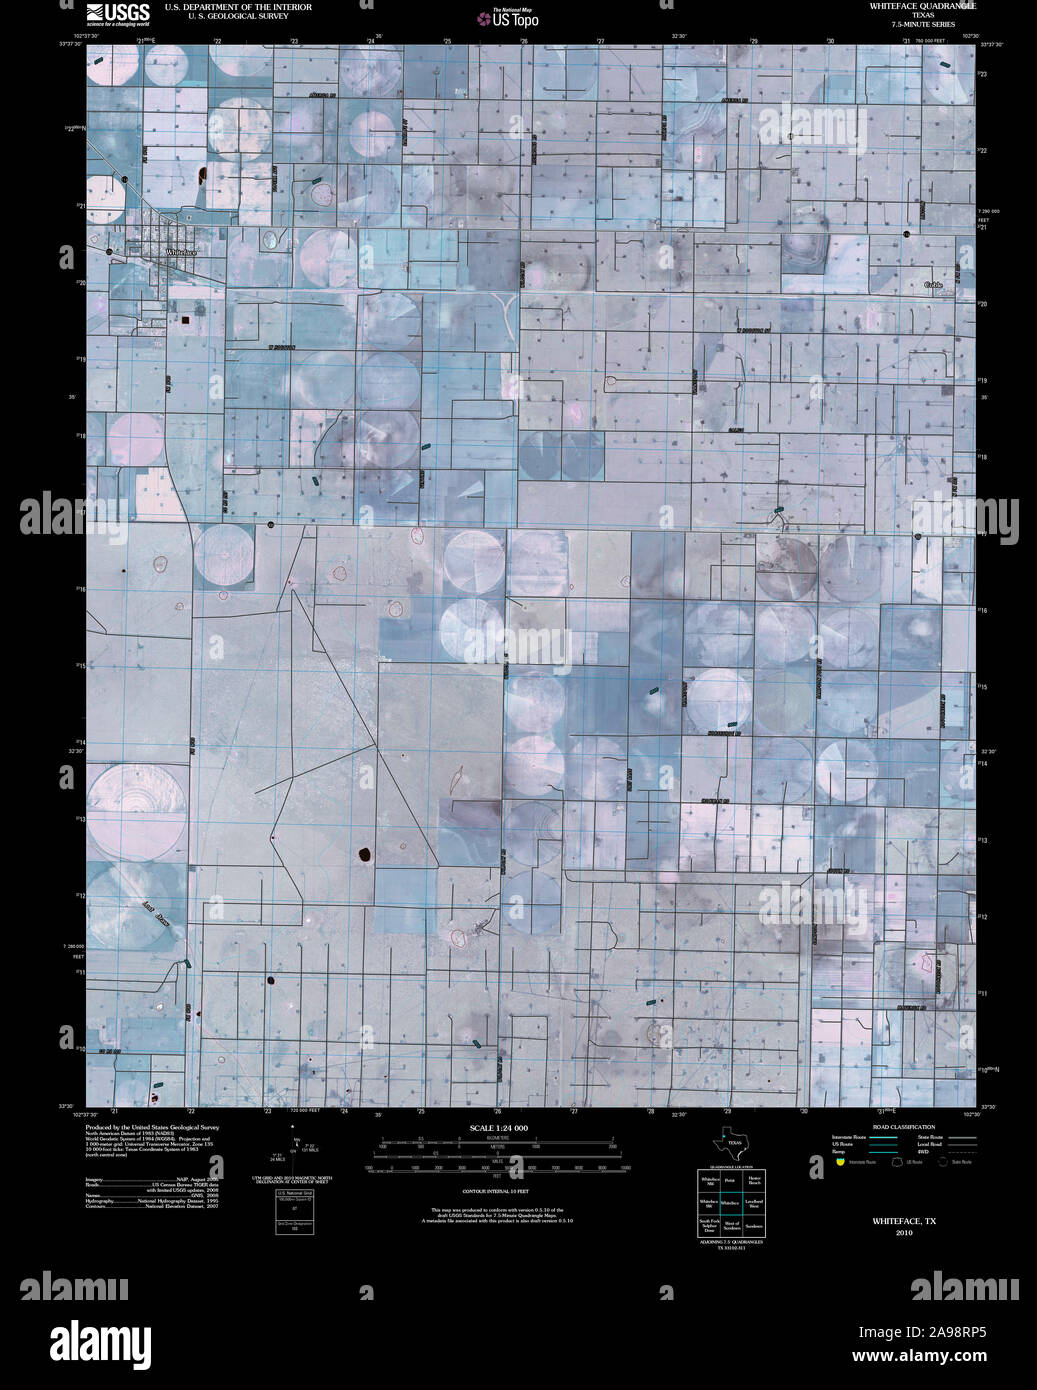 USGS TOPO Map Texas TX Whiteface 20100305 TM Inverted Stock Photo